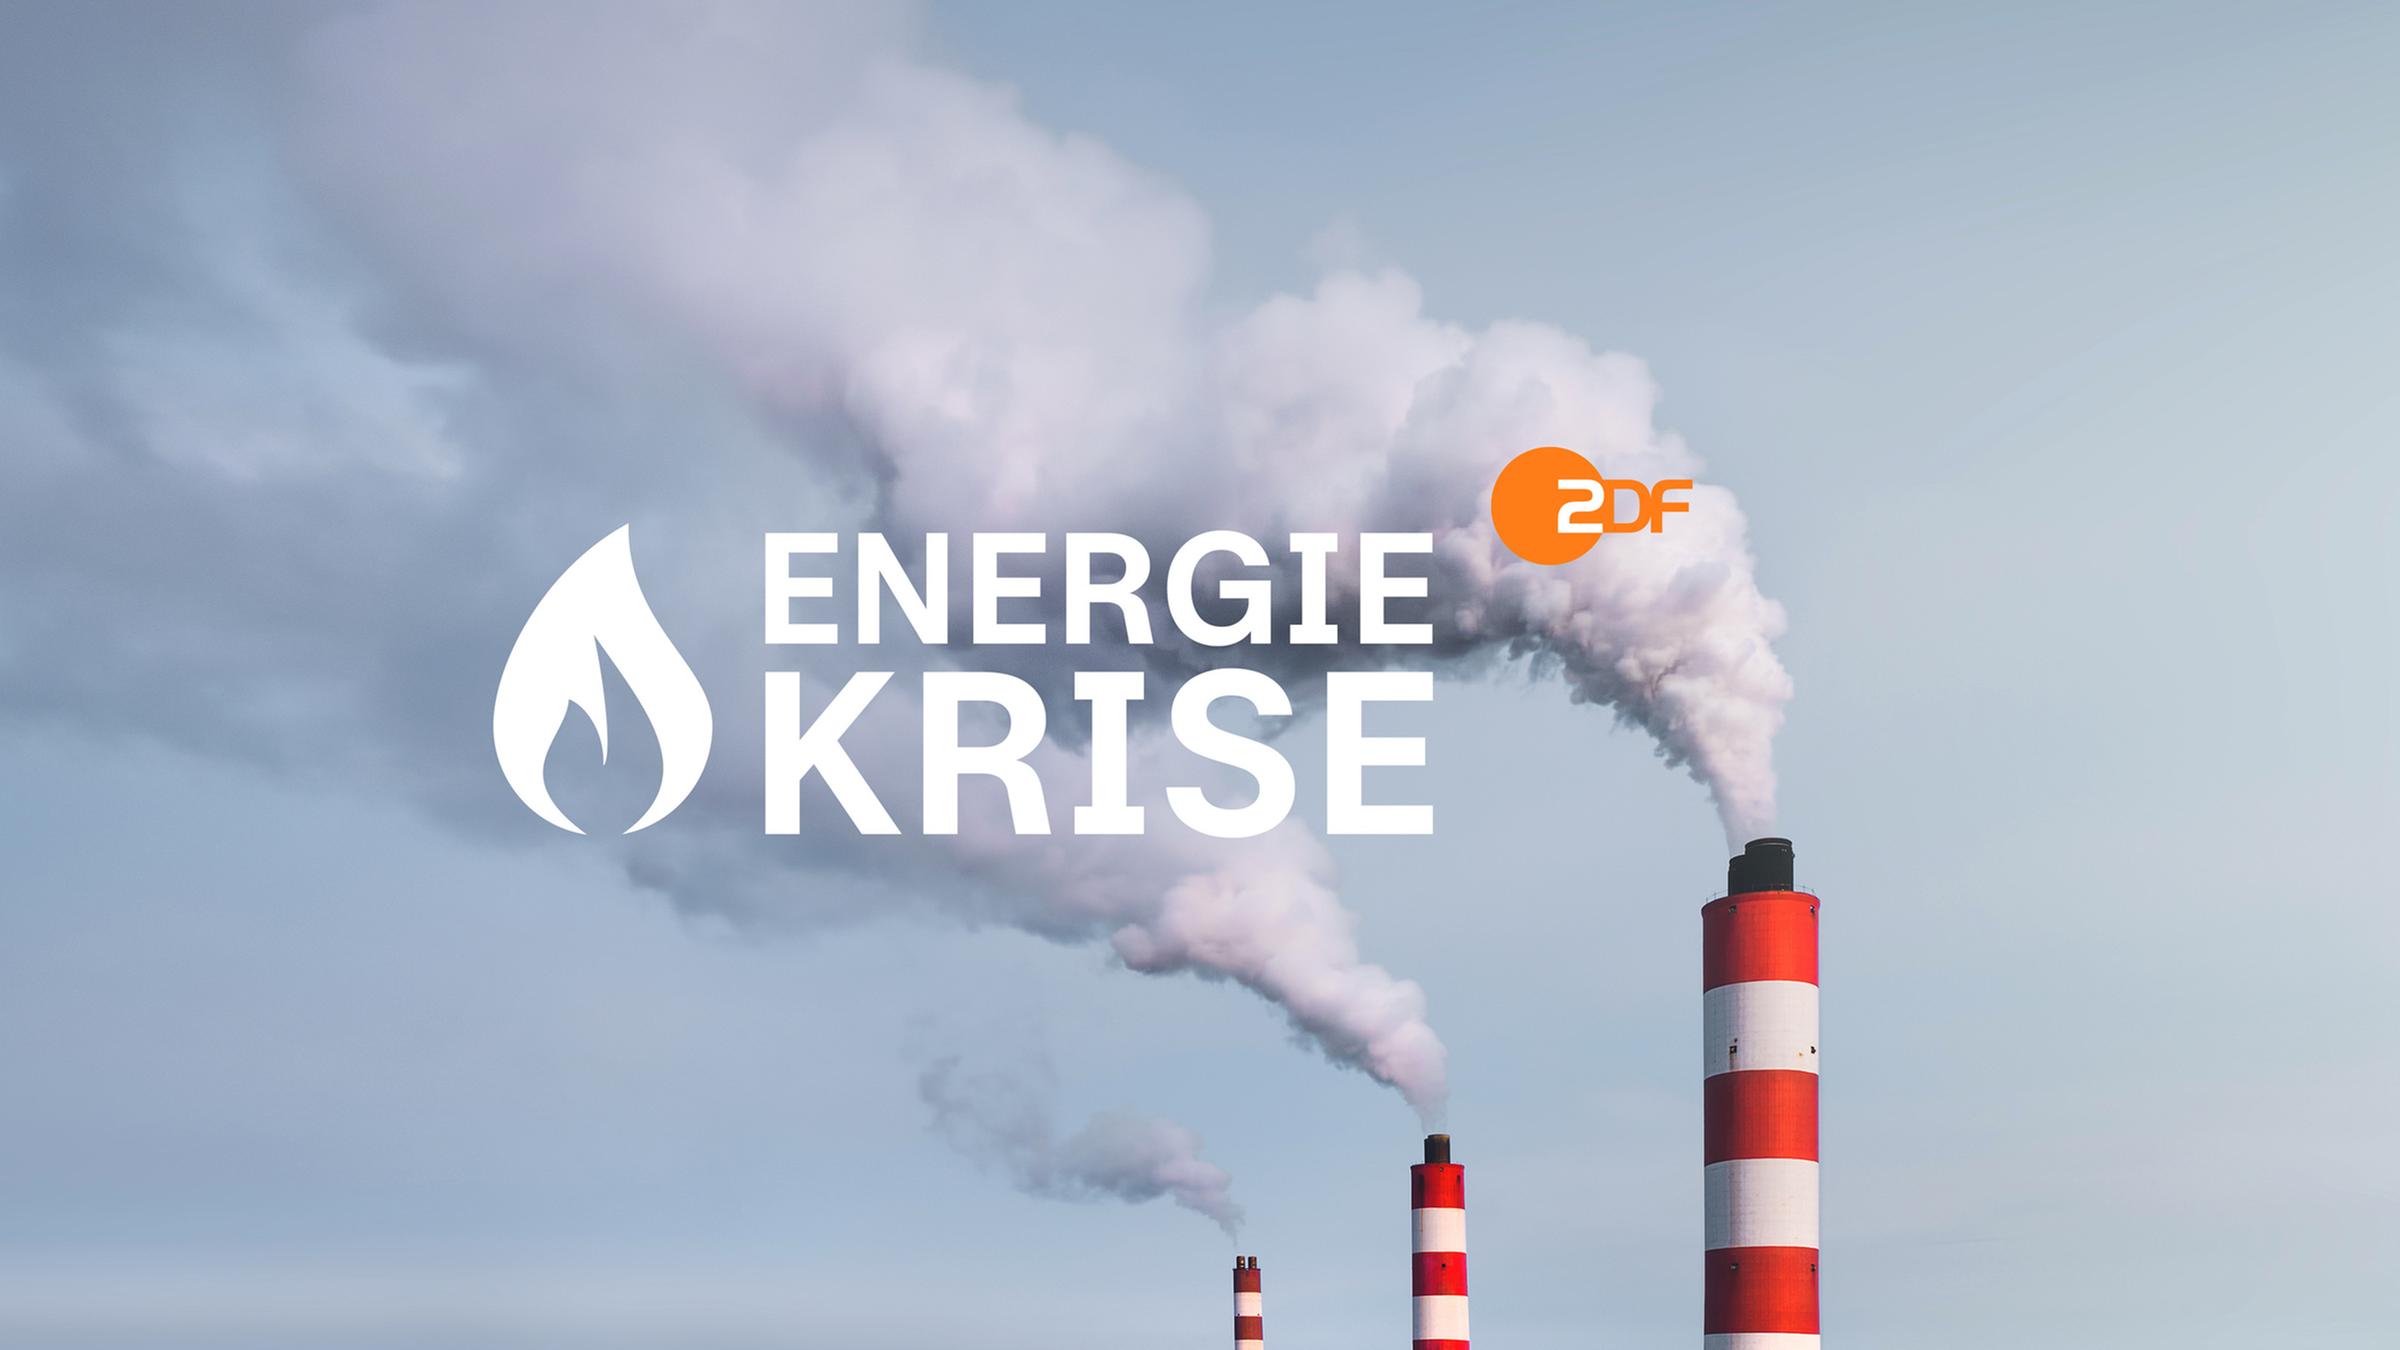 ZDF focuses on energy crisis